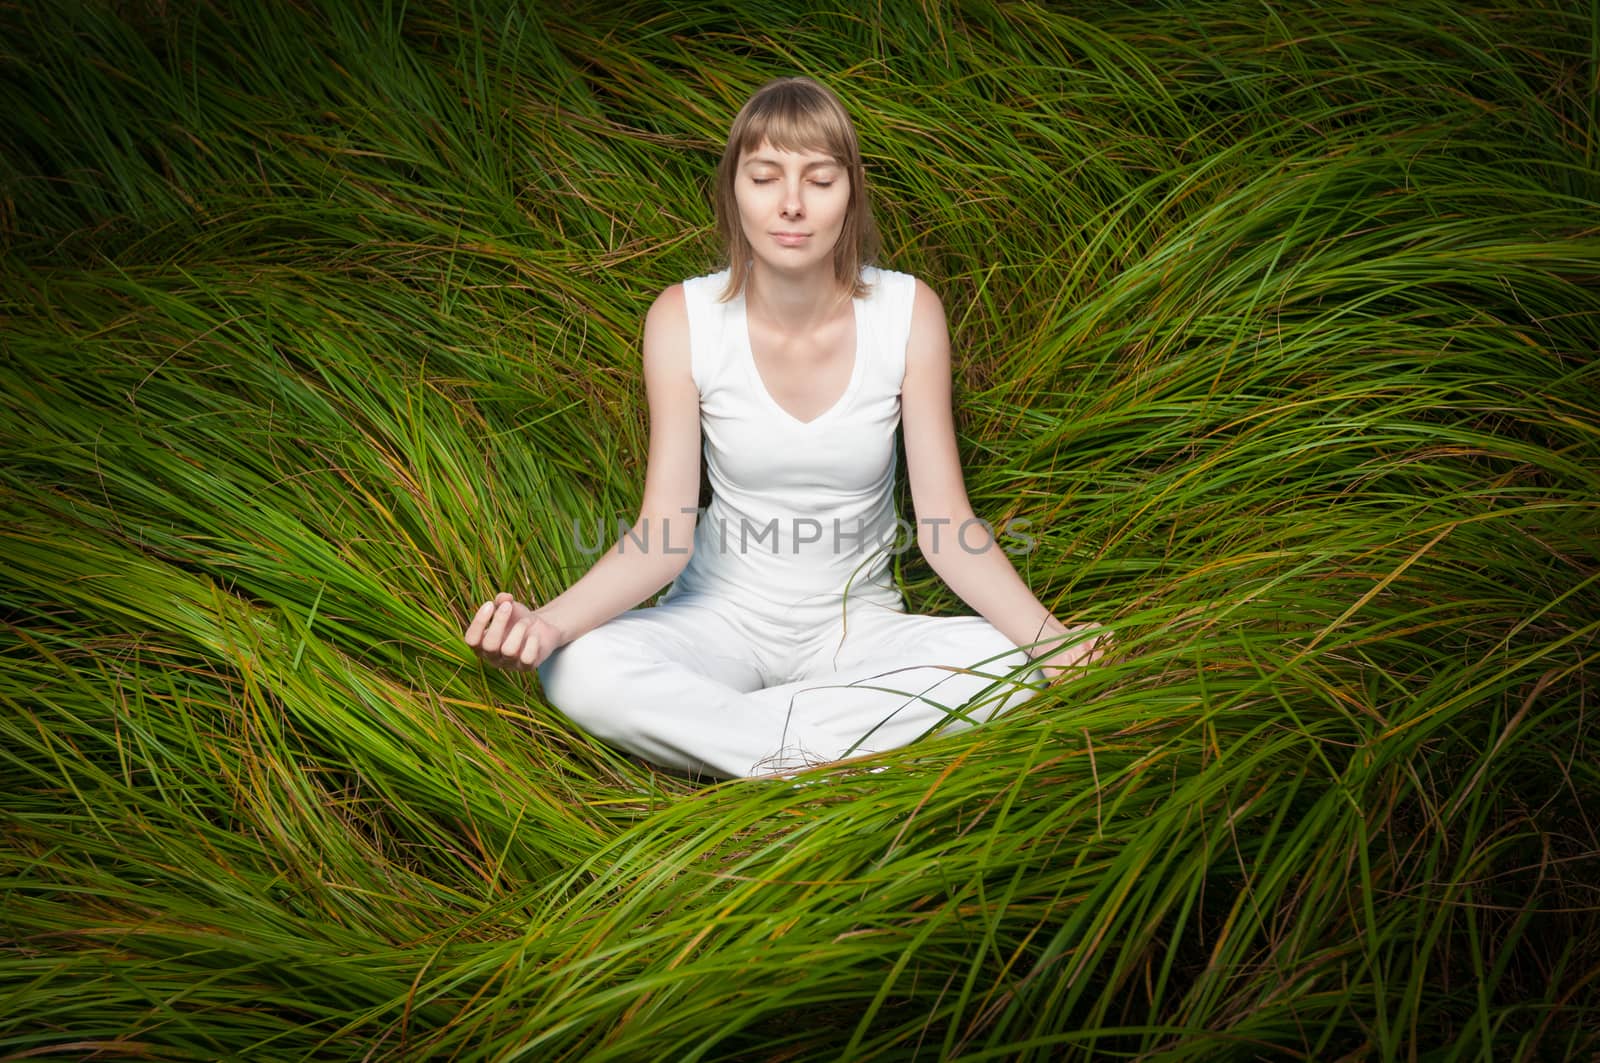 Blonde girl sitting on green grass and meditating. by Yolshin